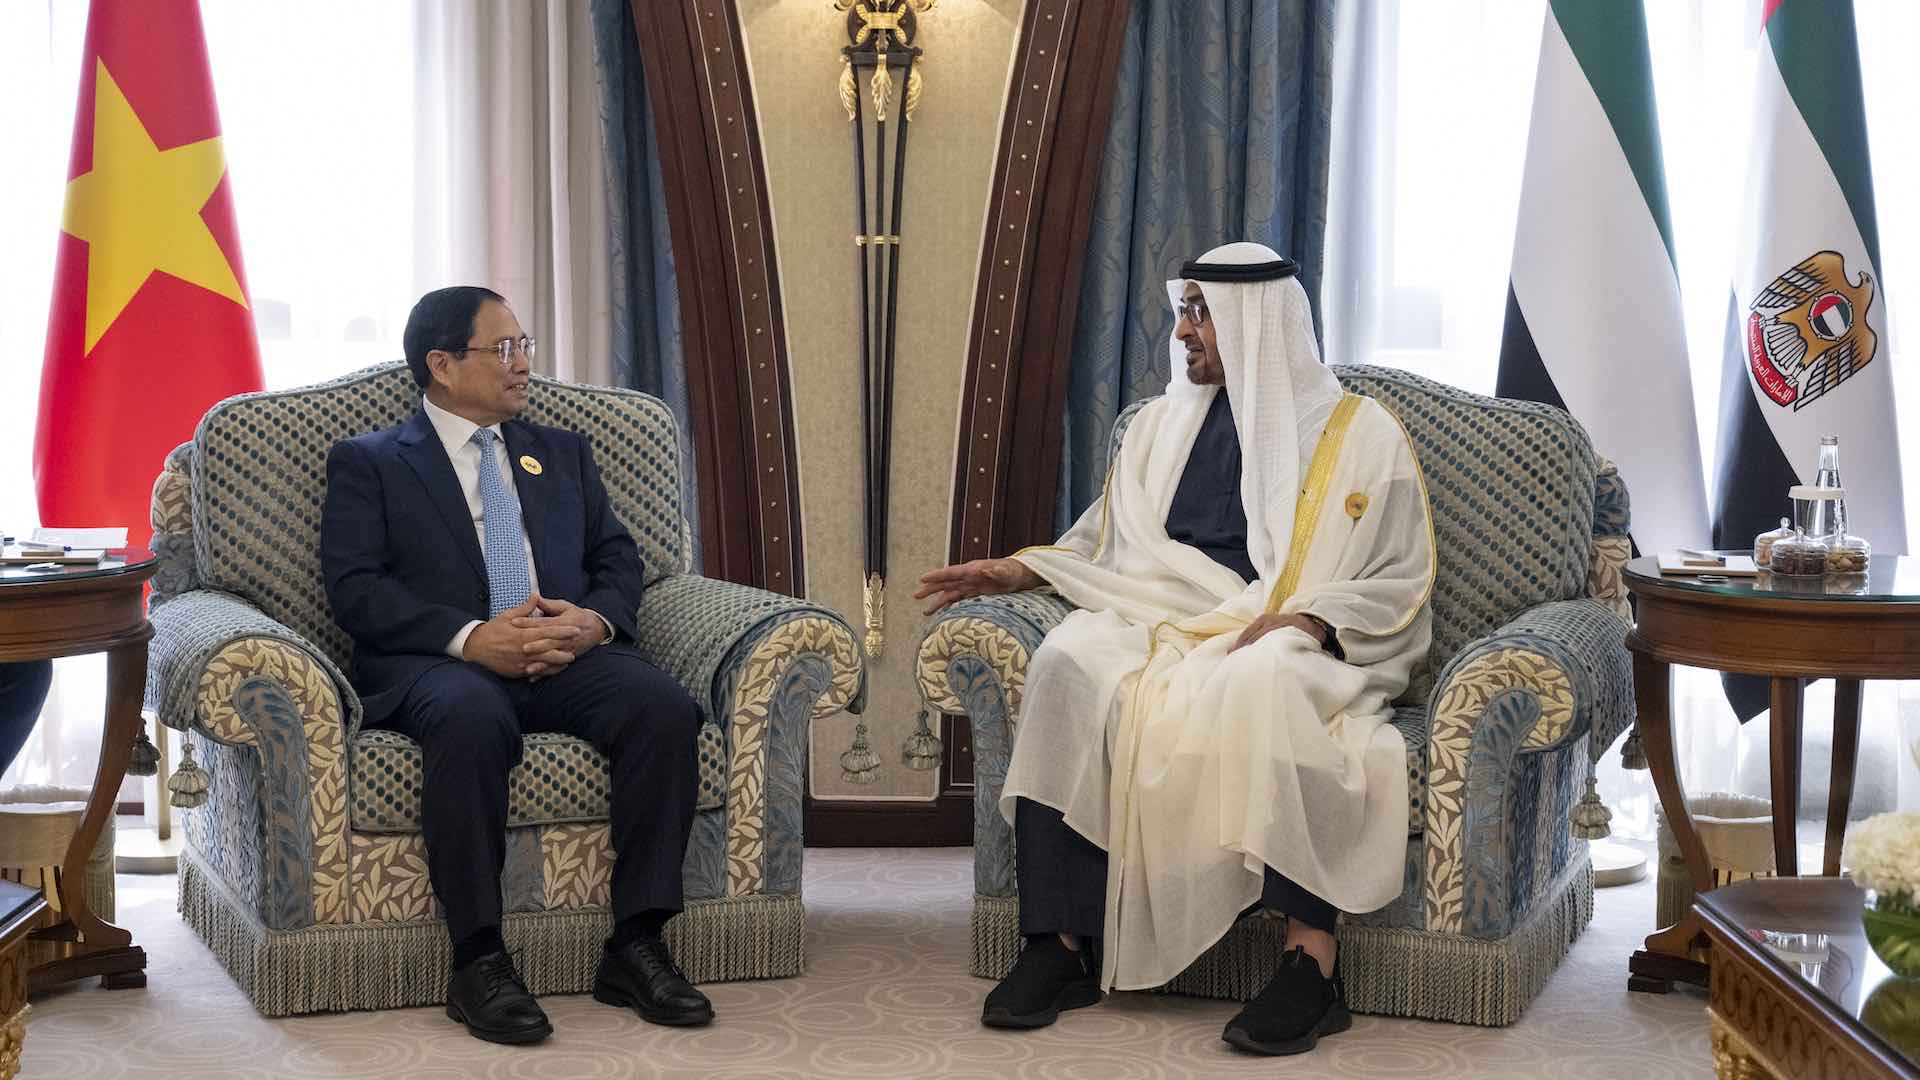 UAE প্রেসিডেন্ট GCC-ASEAN শীর্ষ সম্মেলনে ভিয়েতনামের প্রধানমন্ত্রীর সাথে দ্বিপাক্ষিক আলোচনা করেছেন